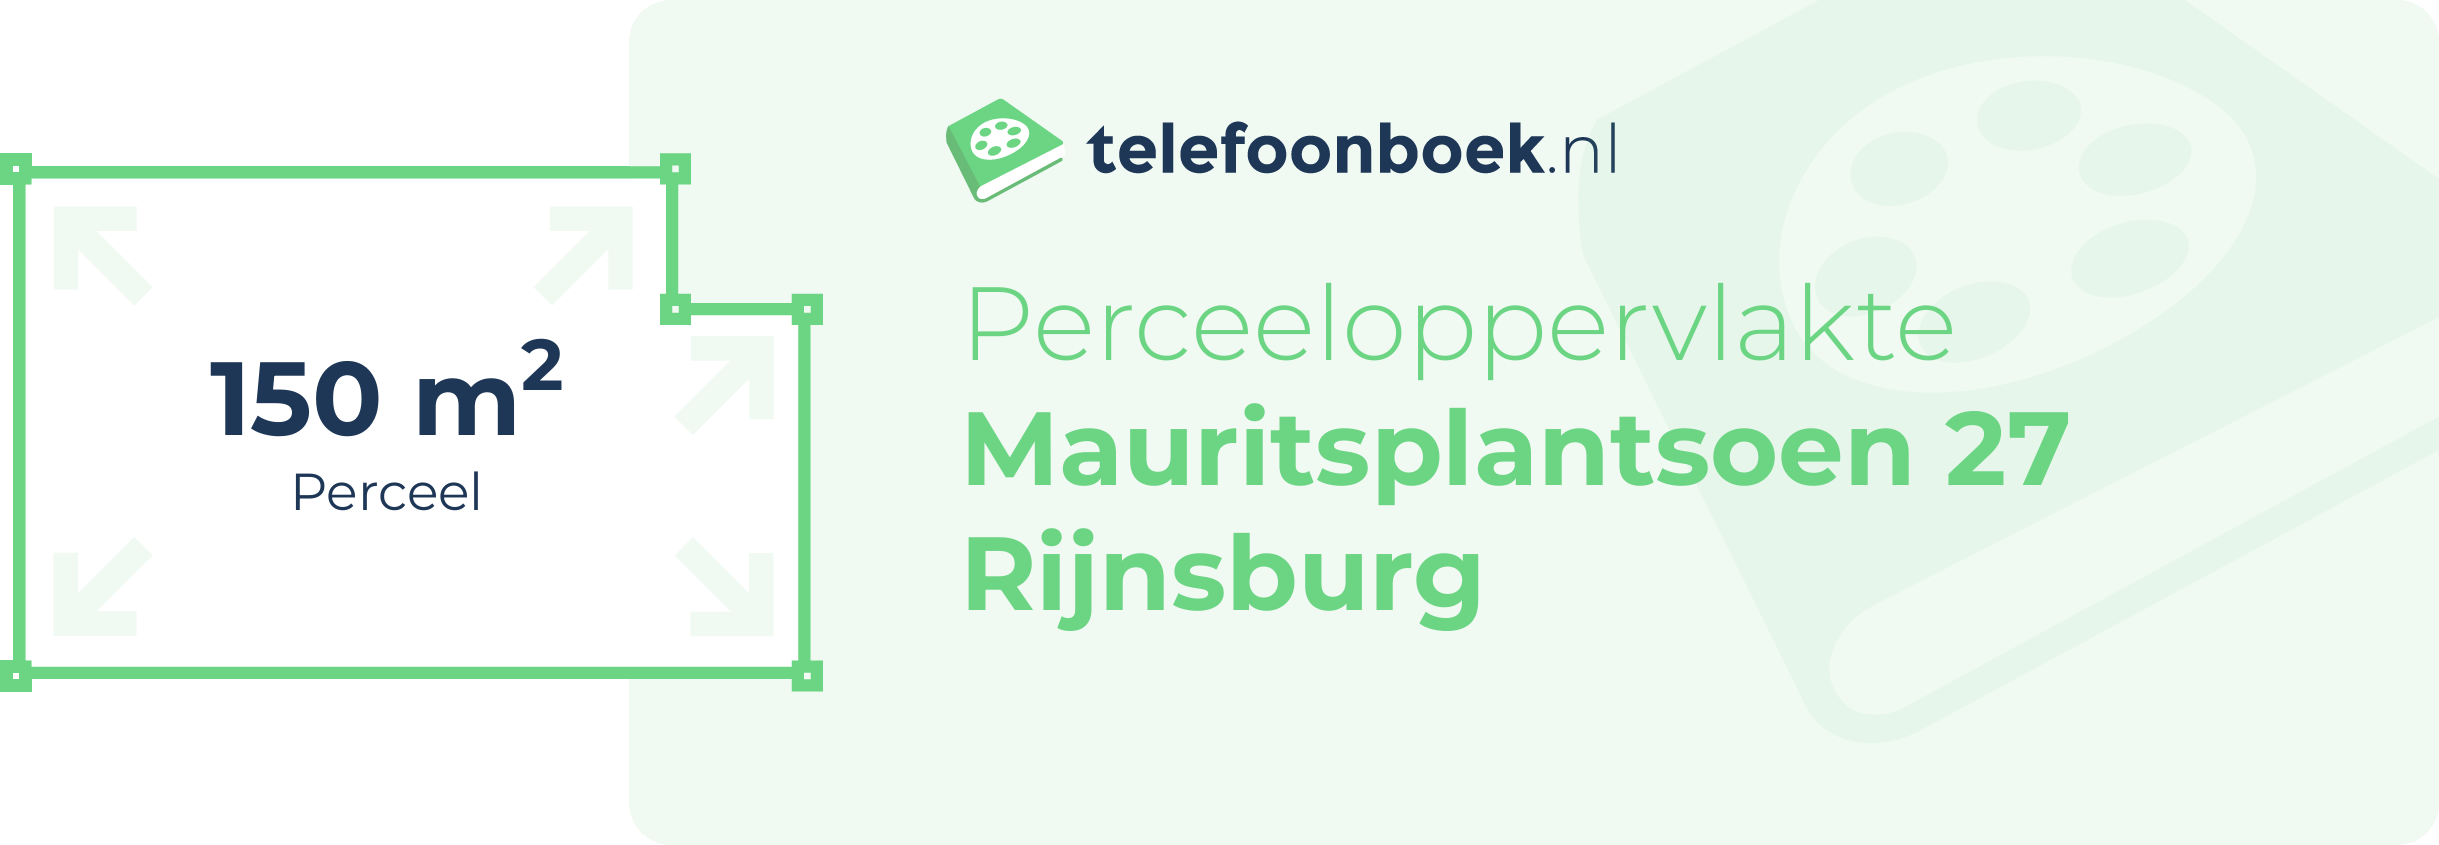 Perceeloppervlakte Mauritsplantsoen 27 Rijnsburg